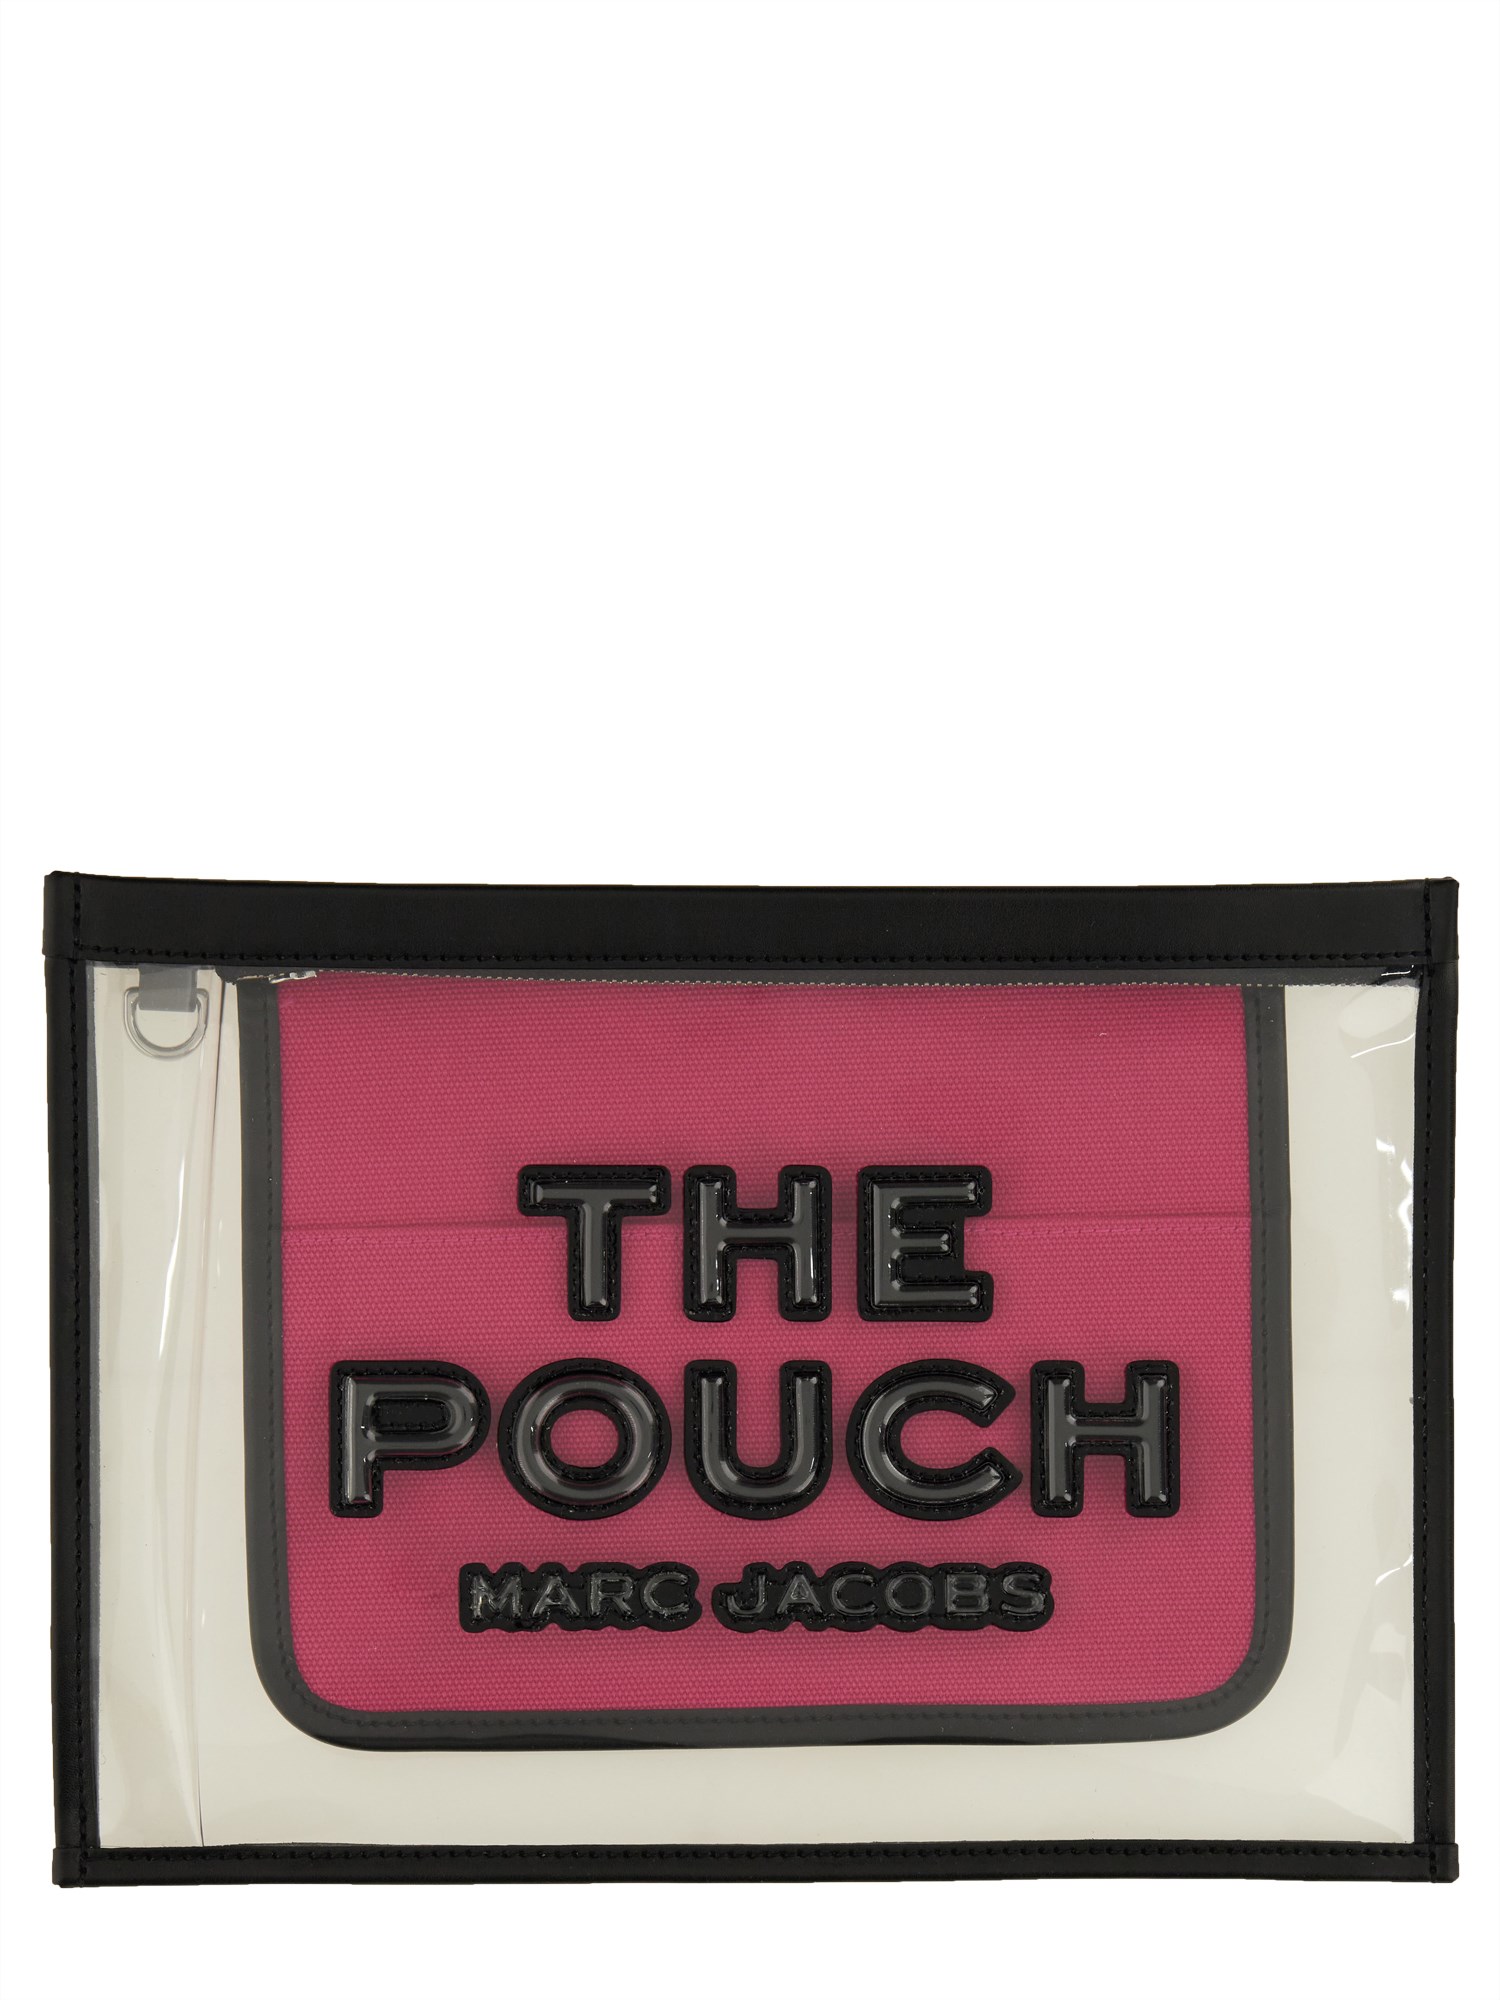 Marc Jacobs marc jacobs pouch large